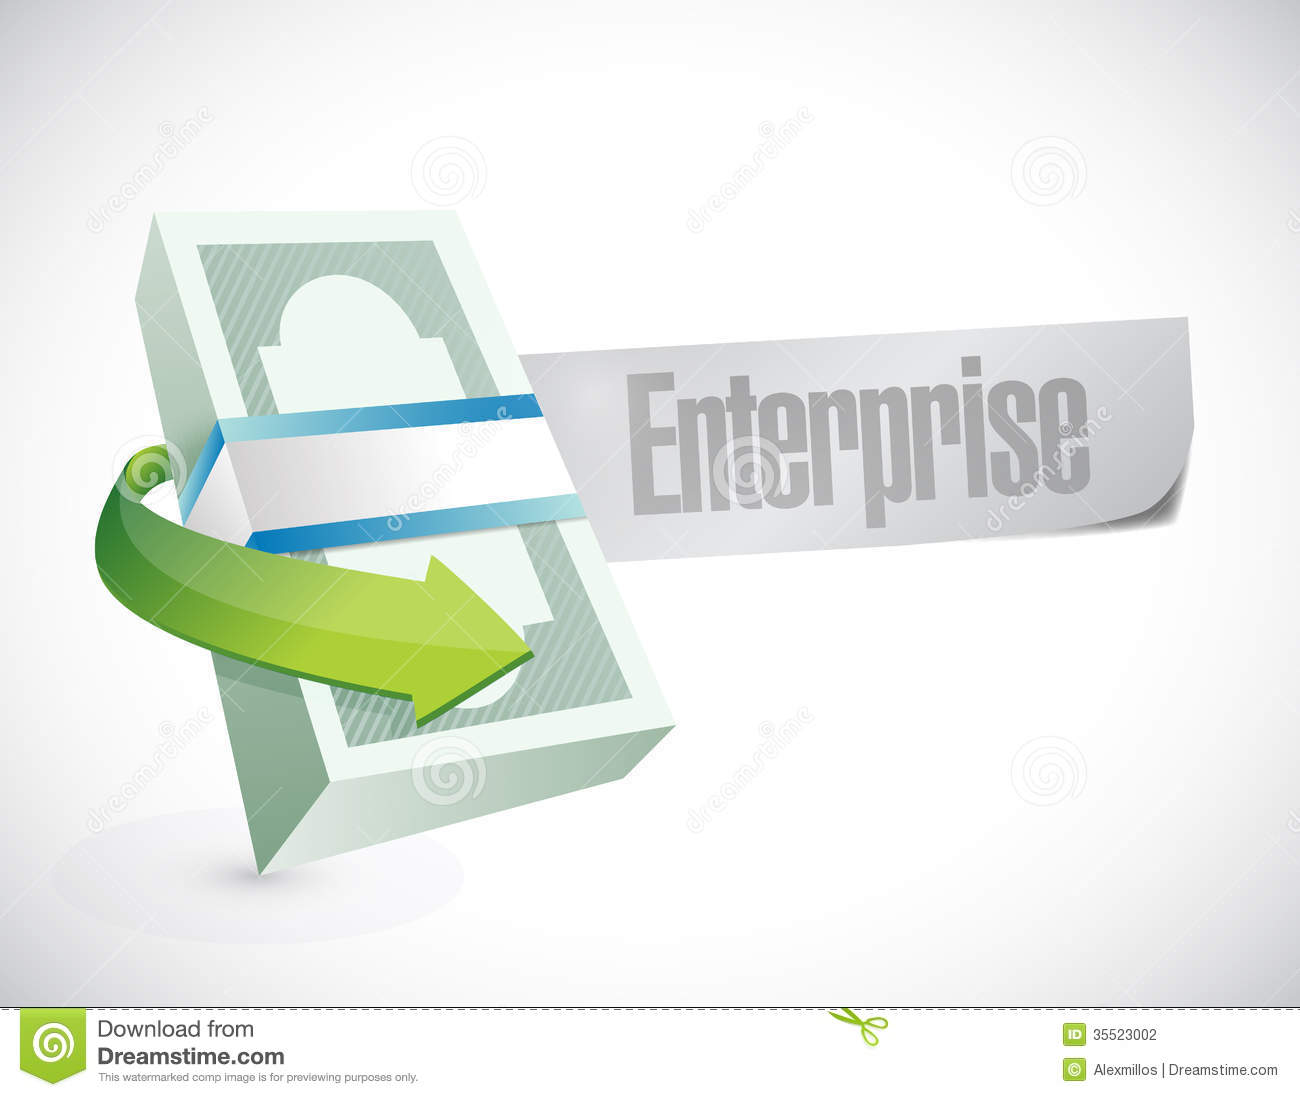 Enterprise Business Icon